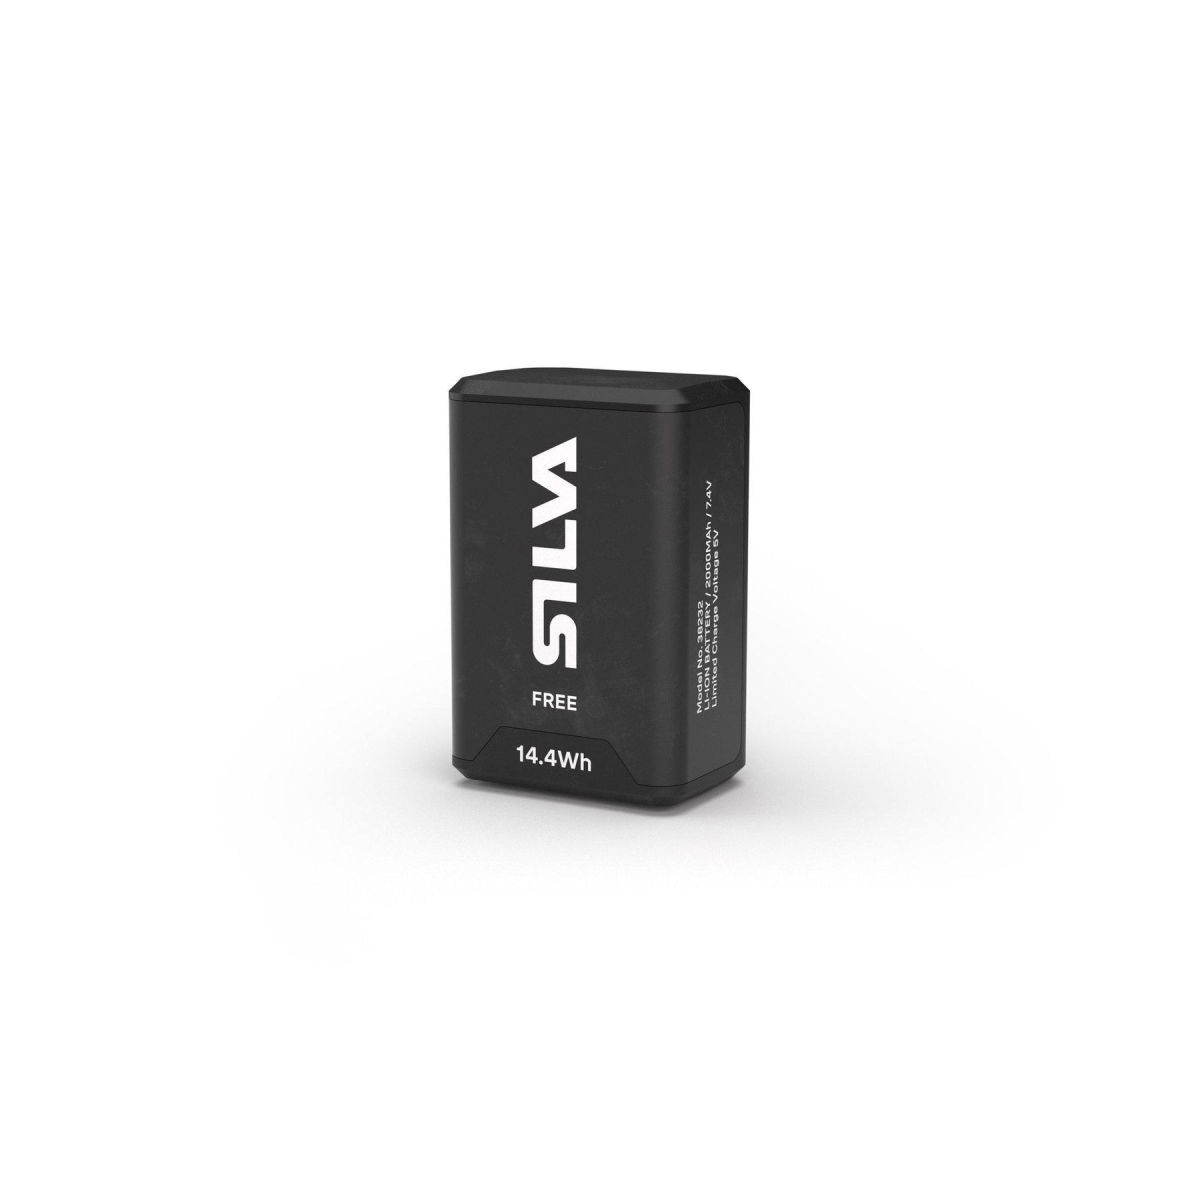 Picture of Silva 526332 2.0Ah Free Headlamp Battery